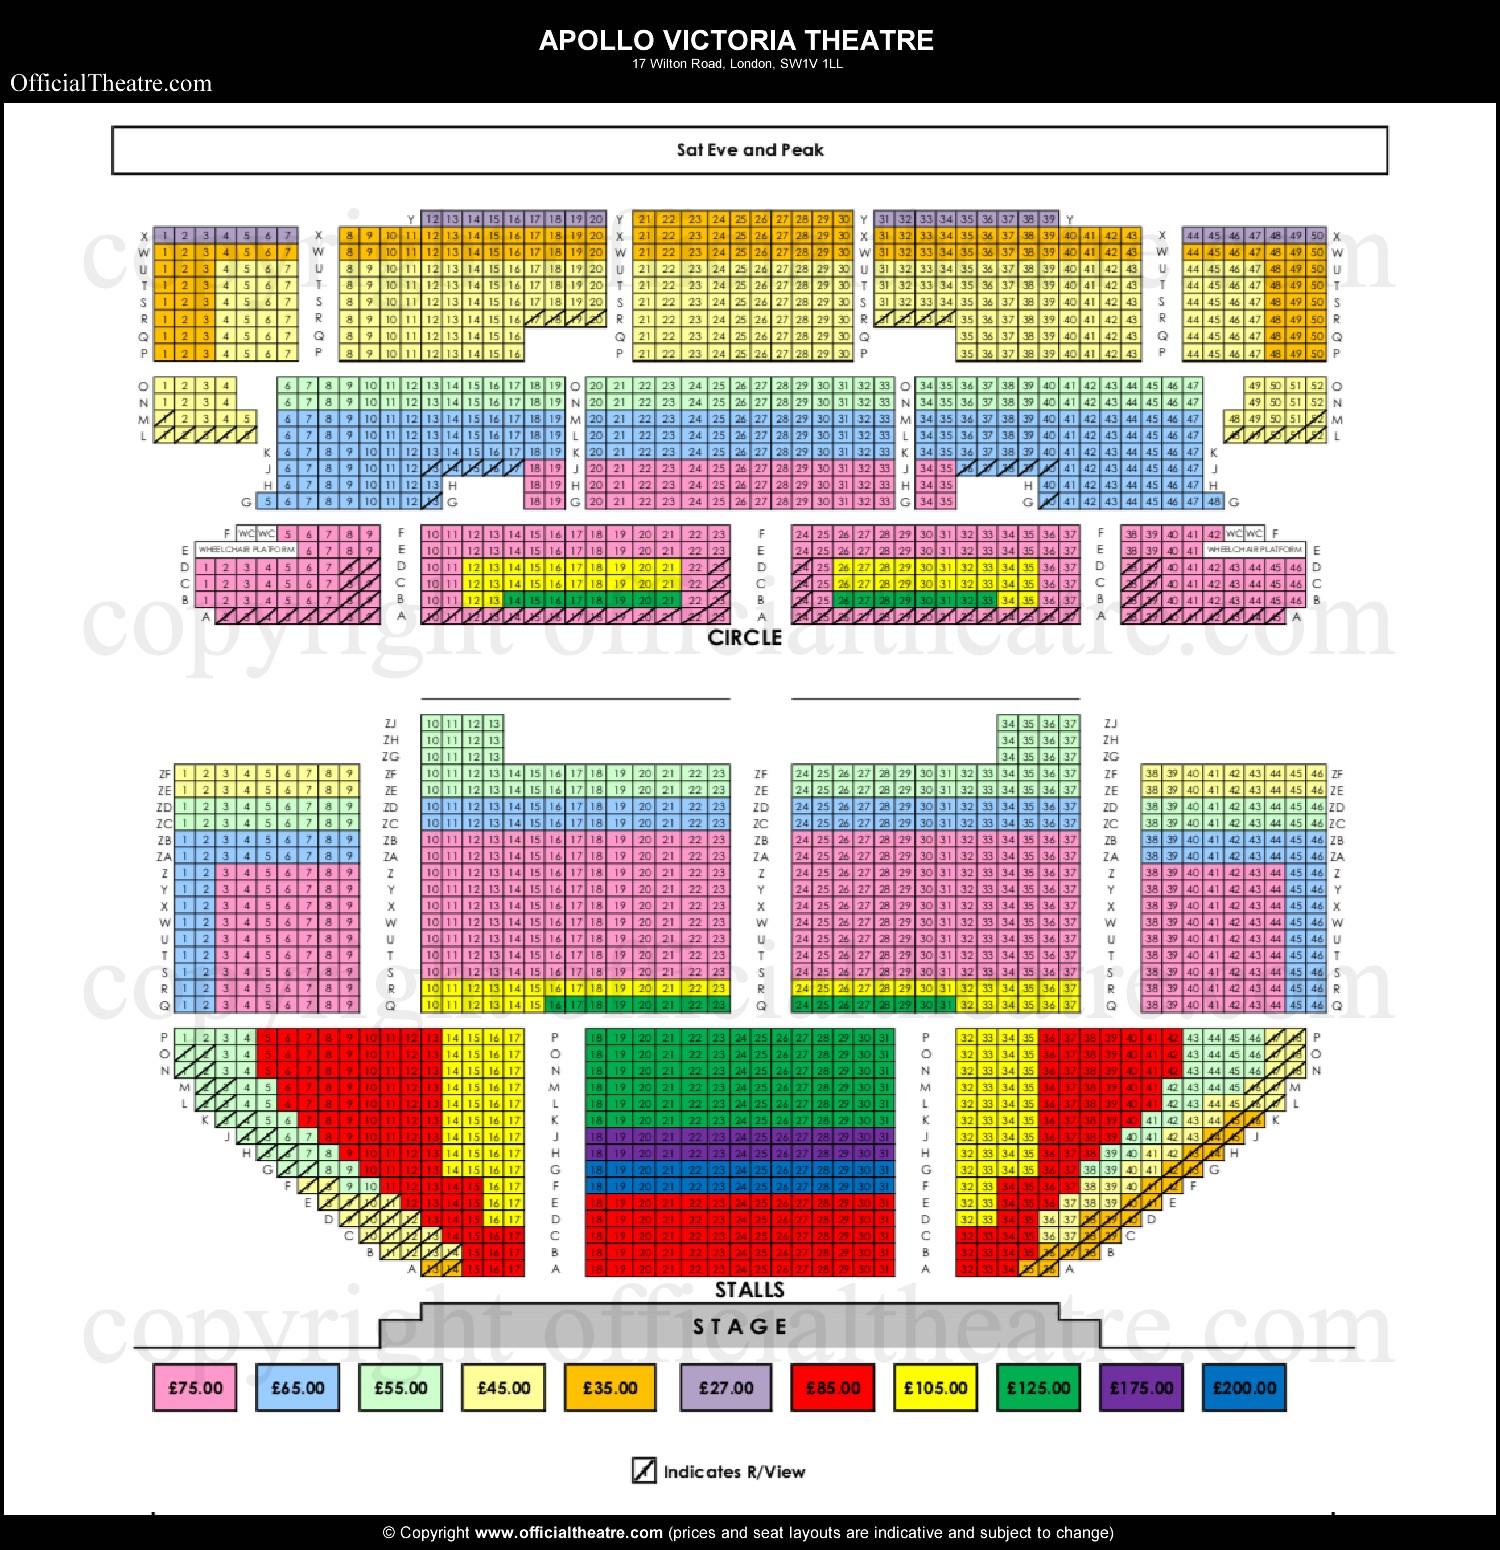 Apollo Victoria Theatre seating plan